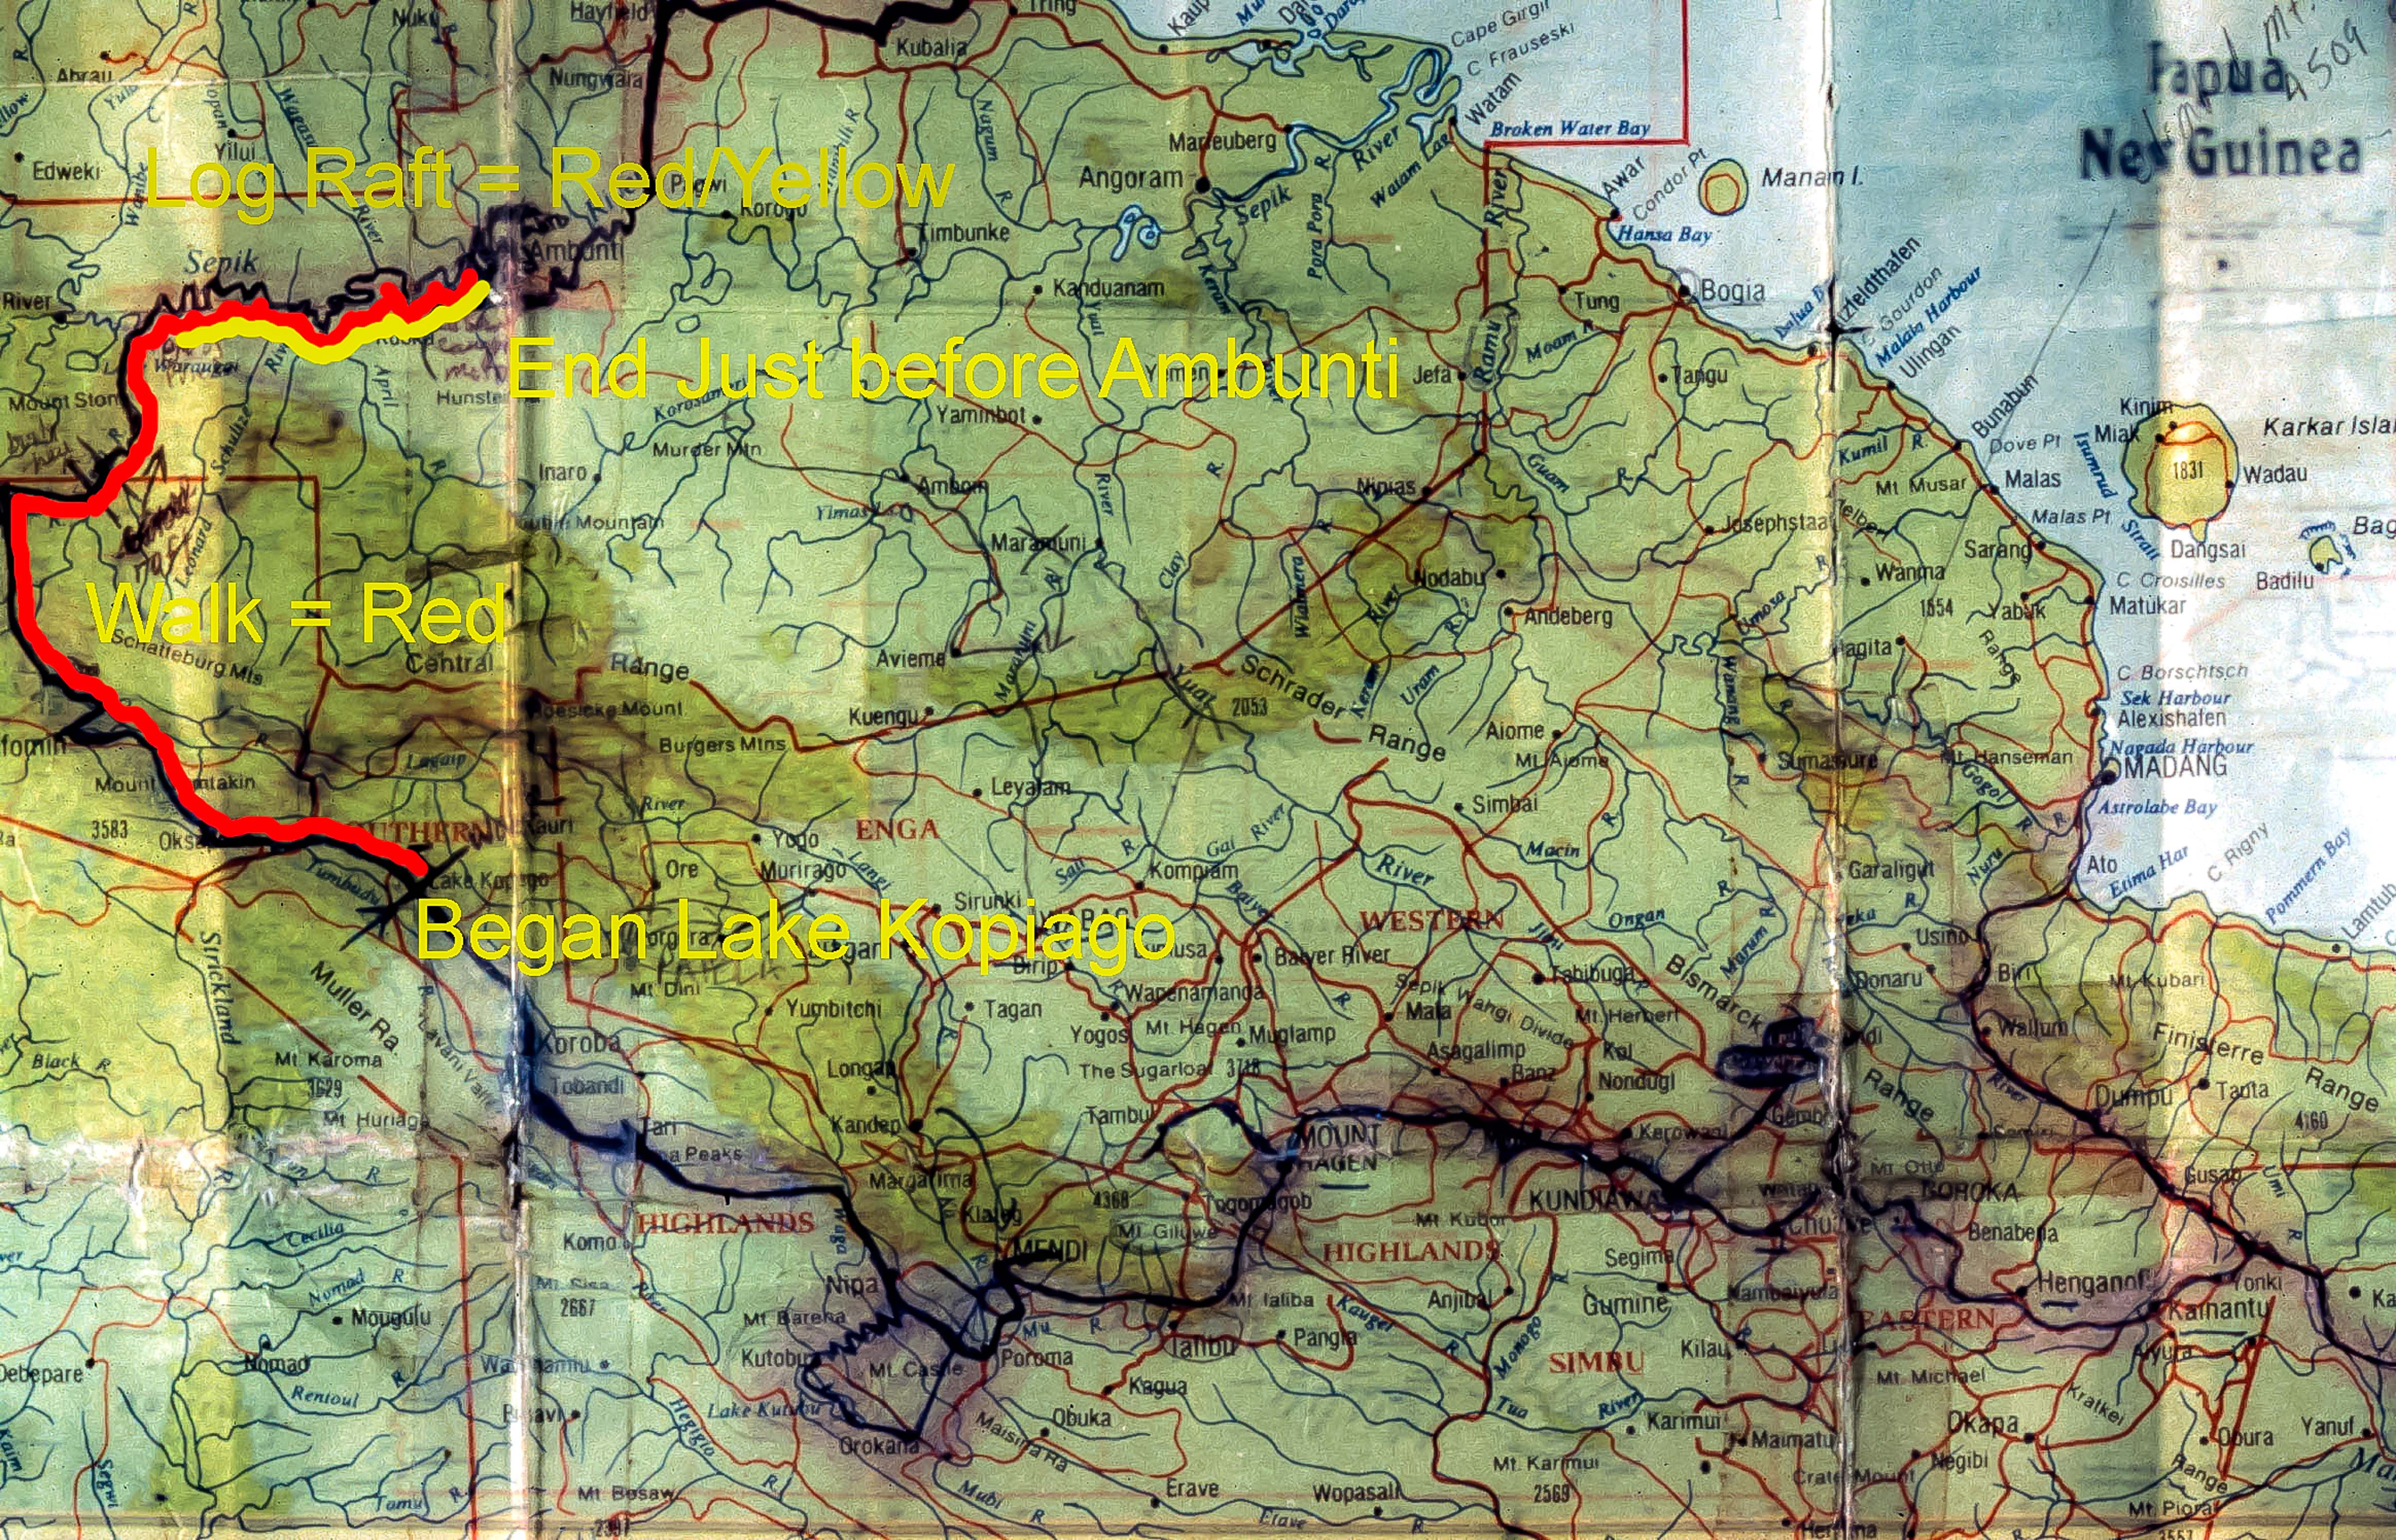 Papua New Guinea, Map of Trek, 1983